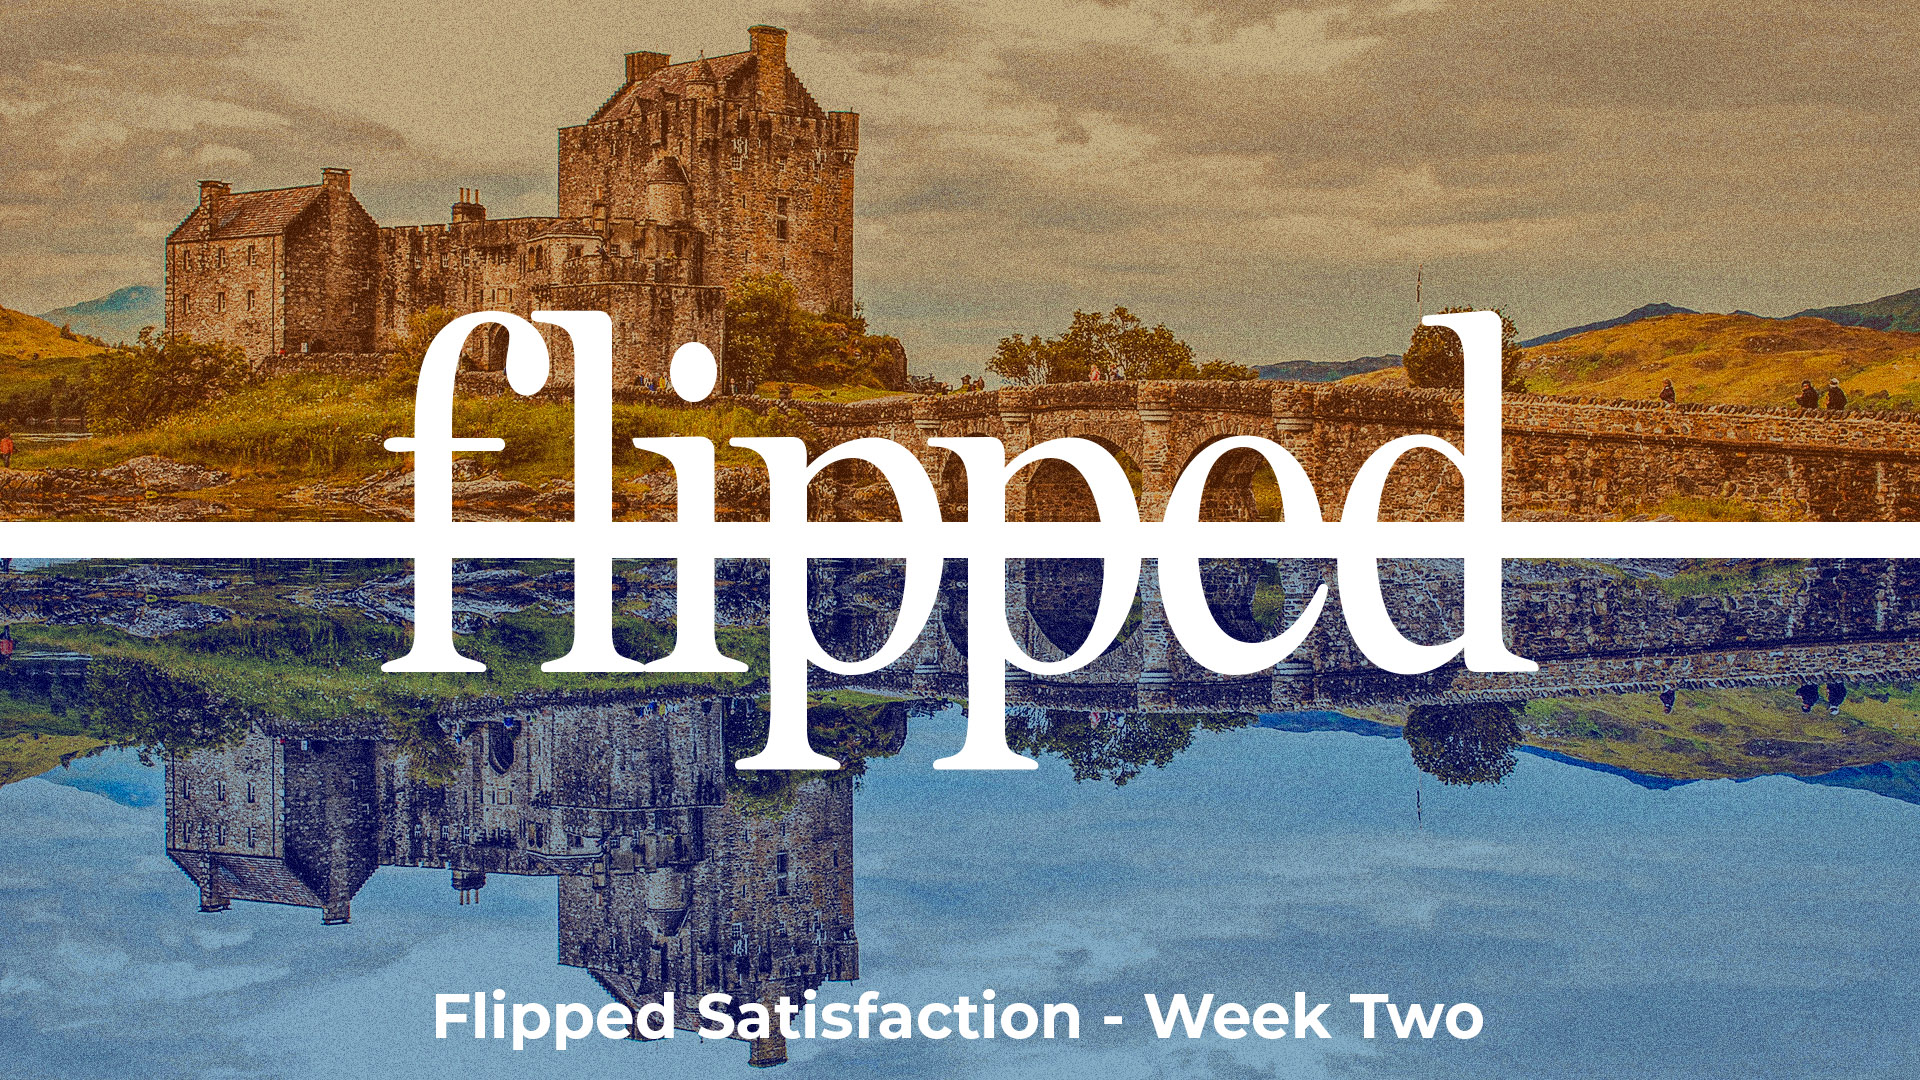 Flipped Satisfaction - Week Two